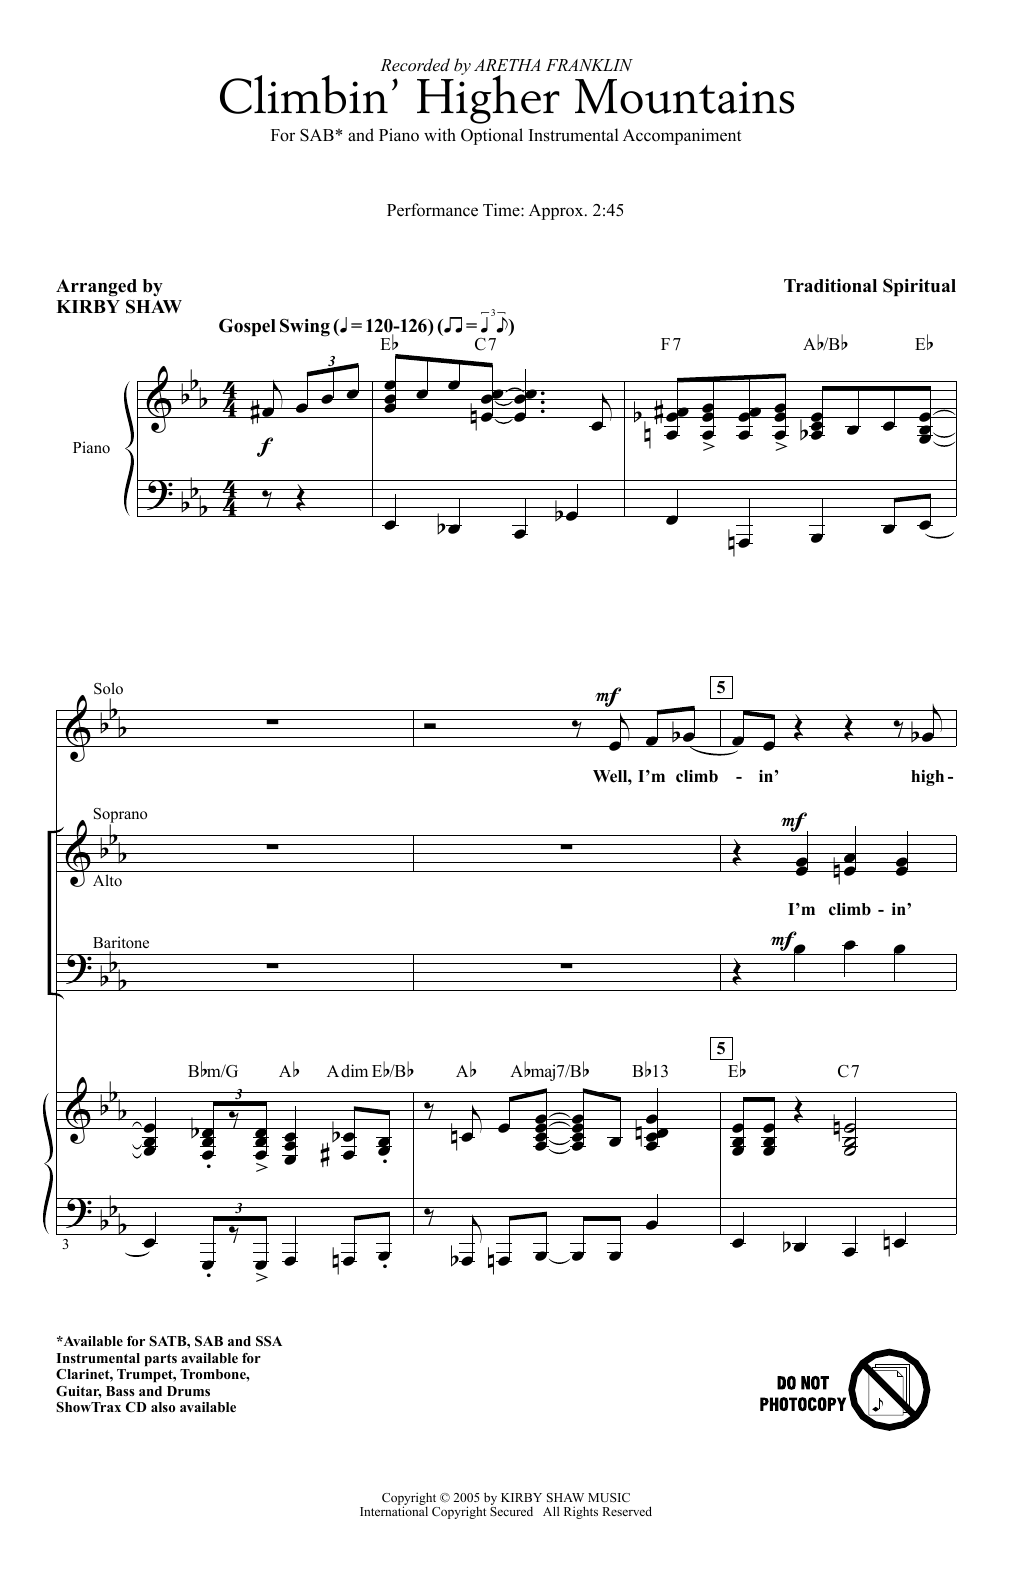 Download Aretha Franklin Climbin' Higher Mountains (arr. Kirby S Sheet Music